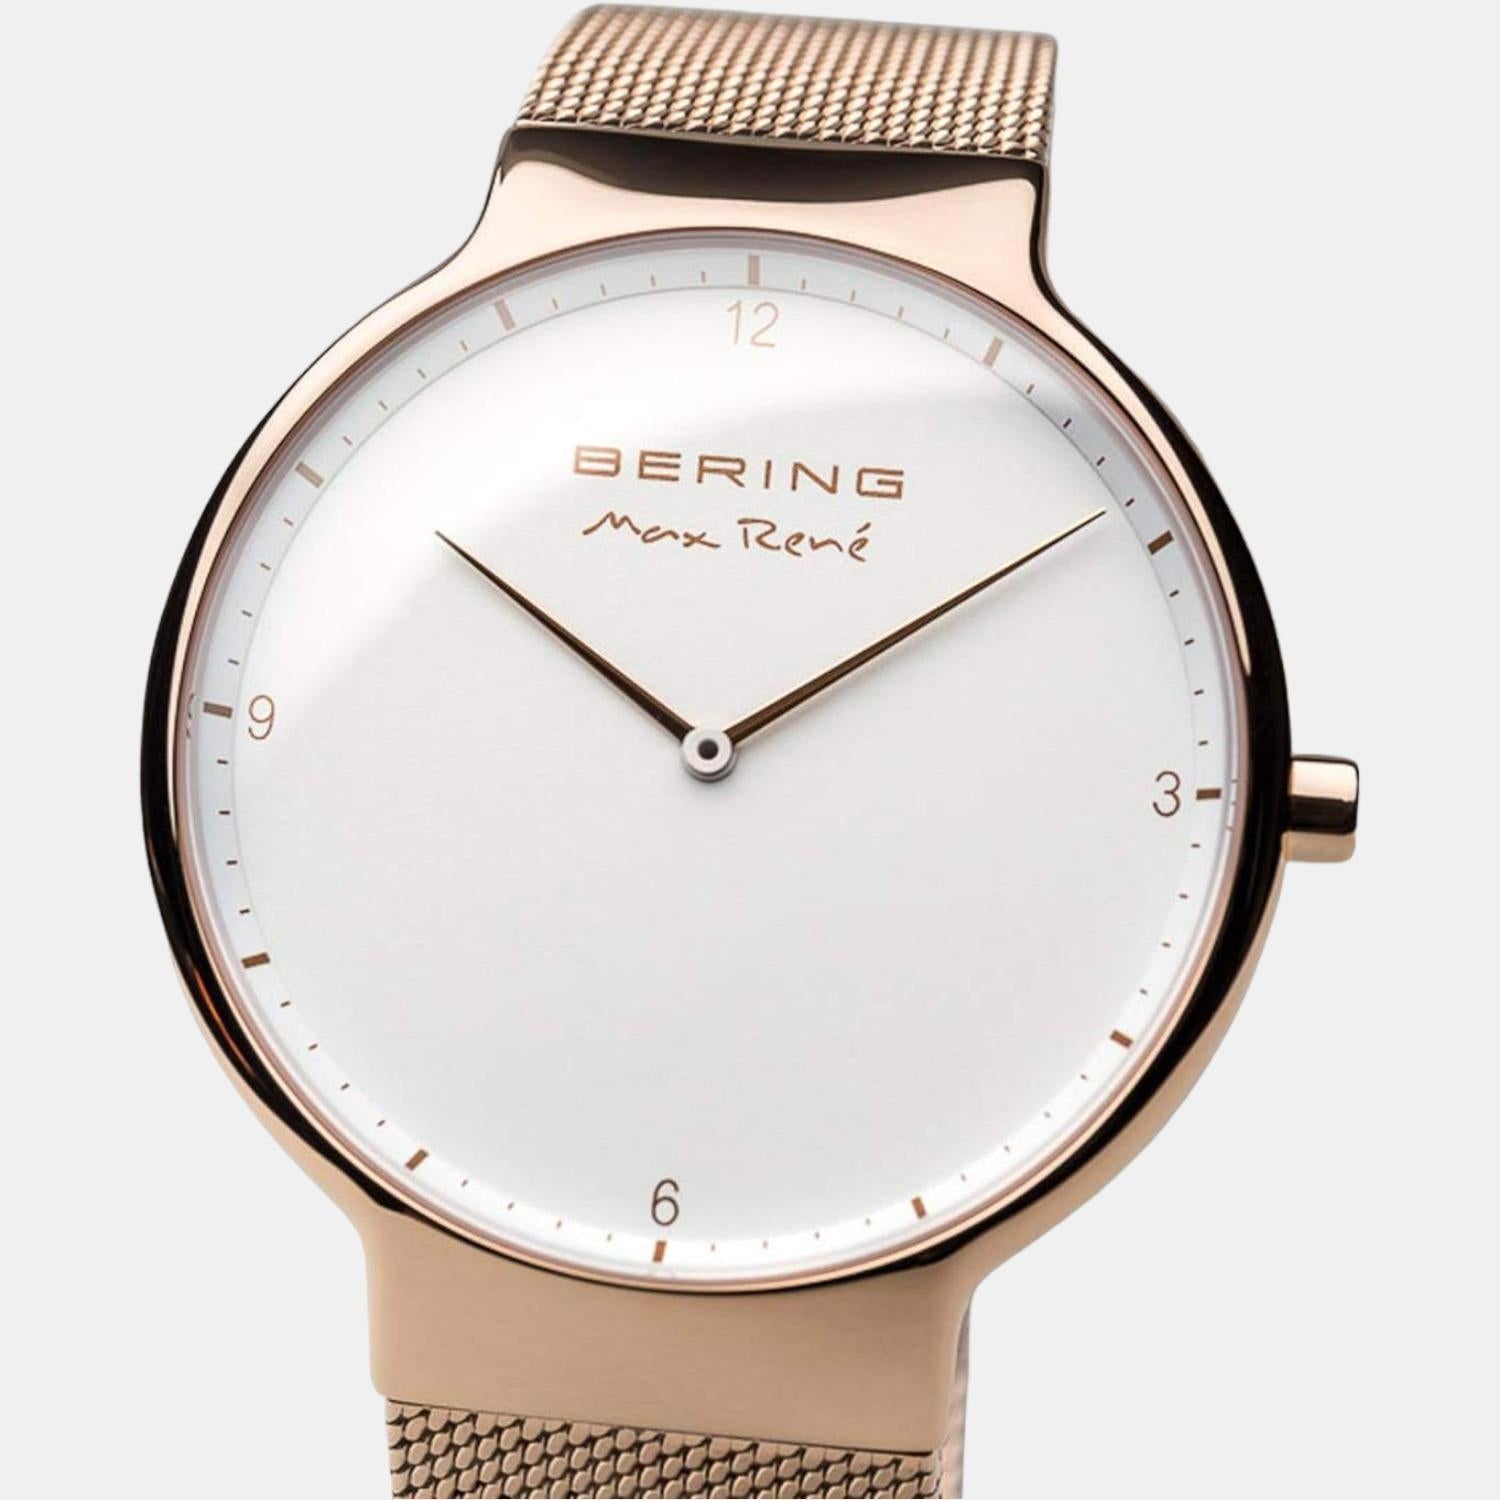 bering-stainless-steel-white-analog-men-watch-15540-364